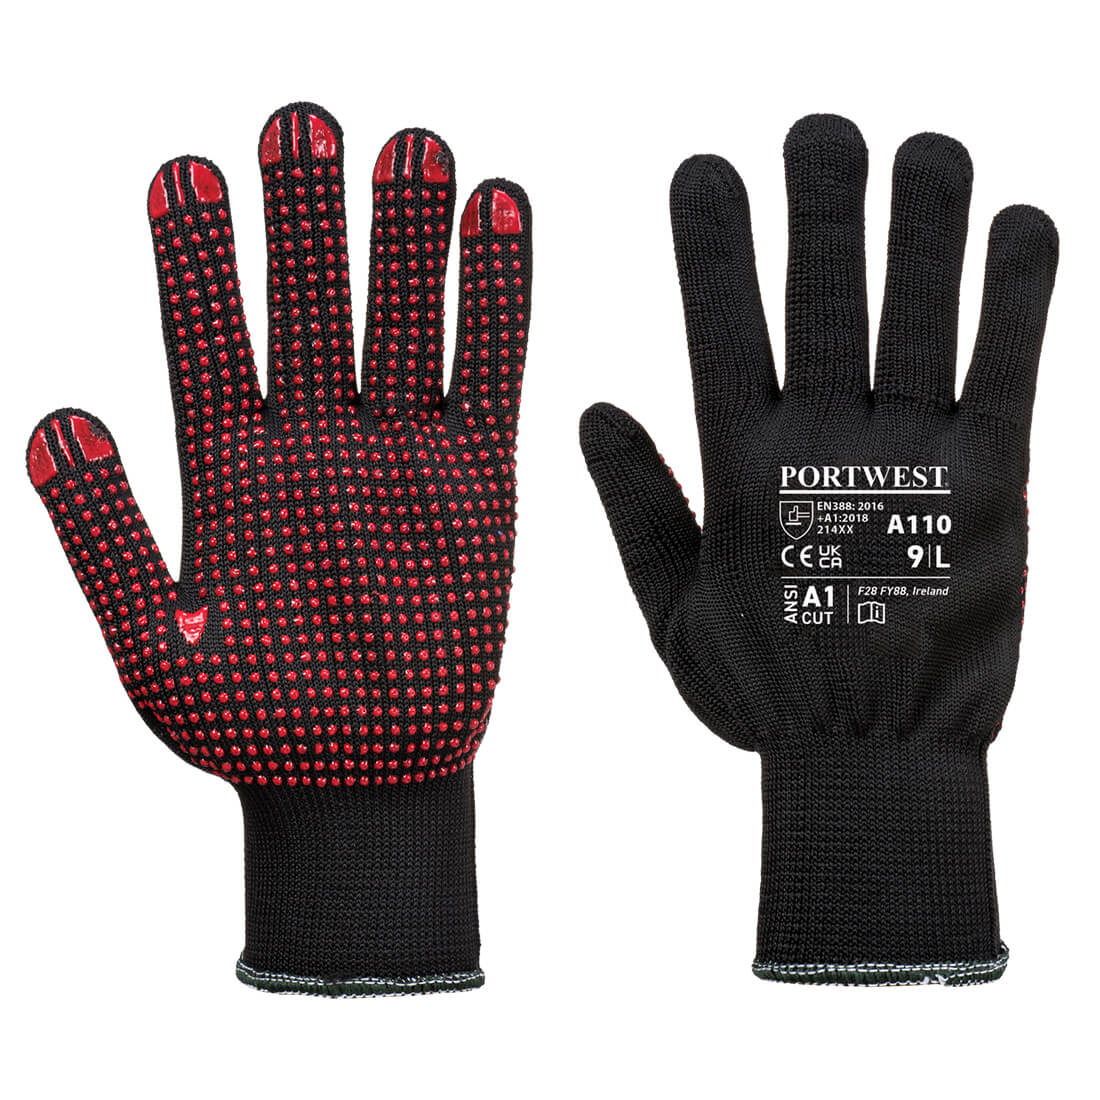 Polka Dot Gloves, Black - Medium